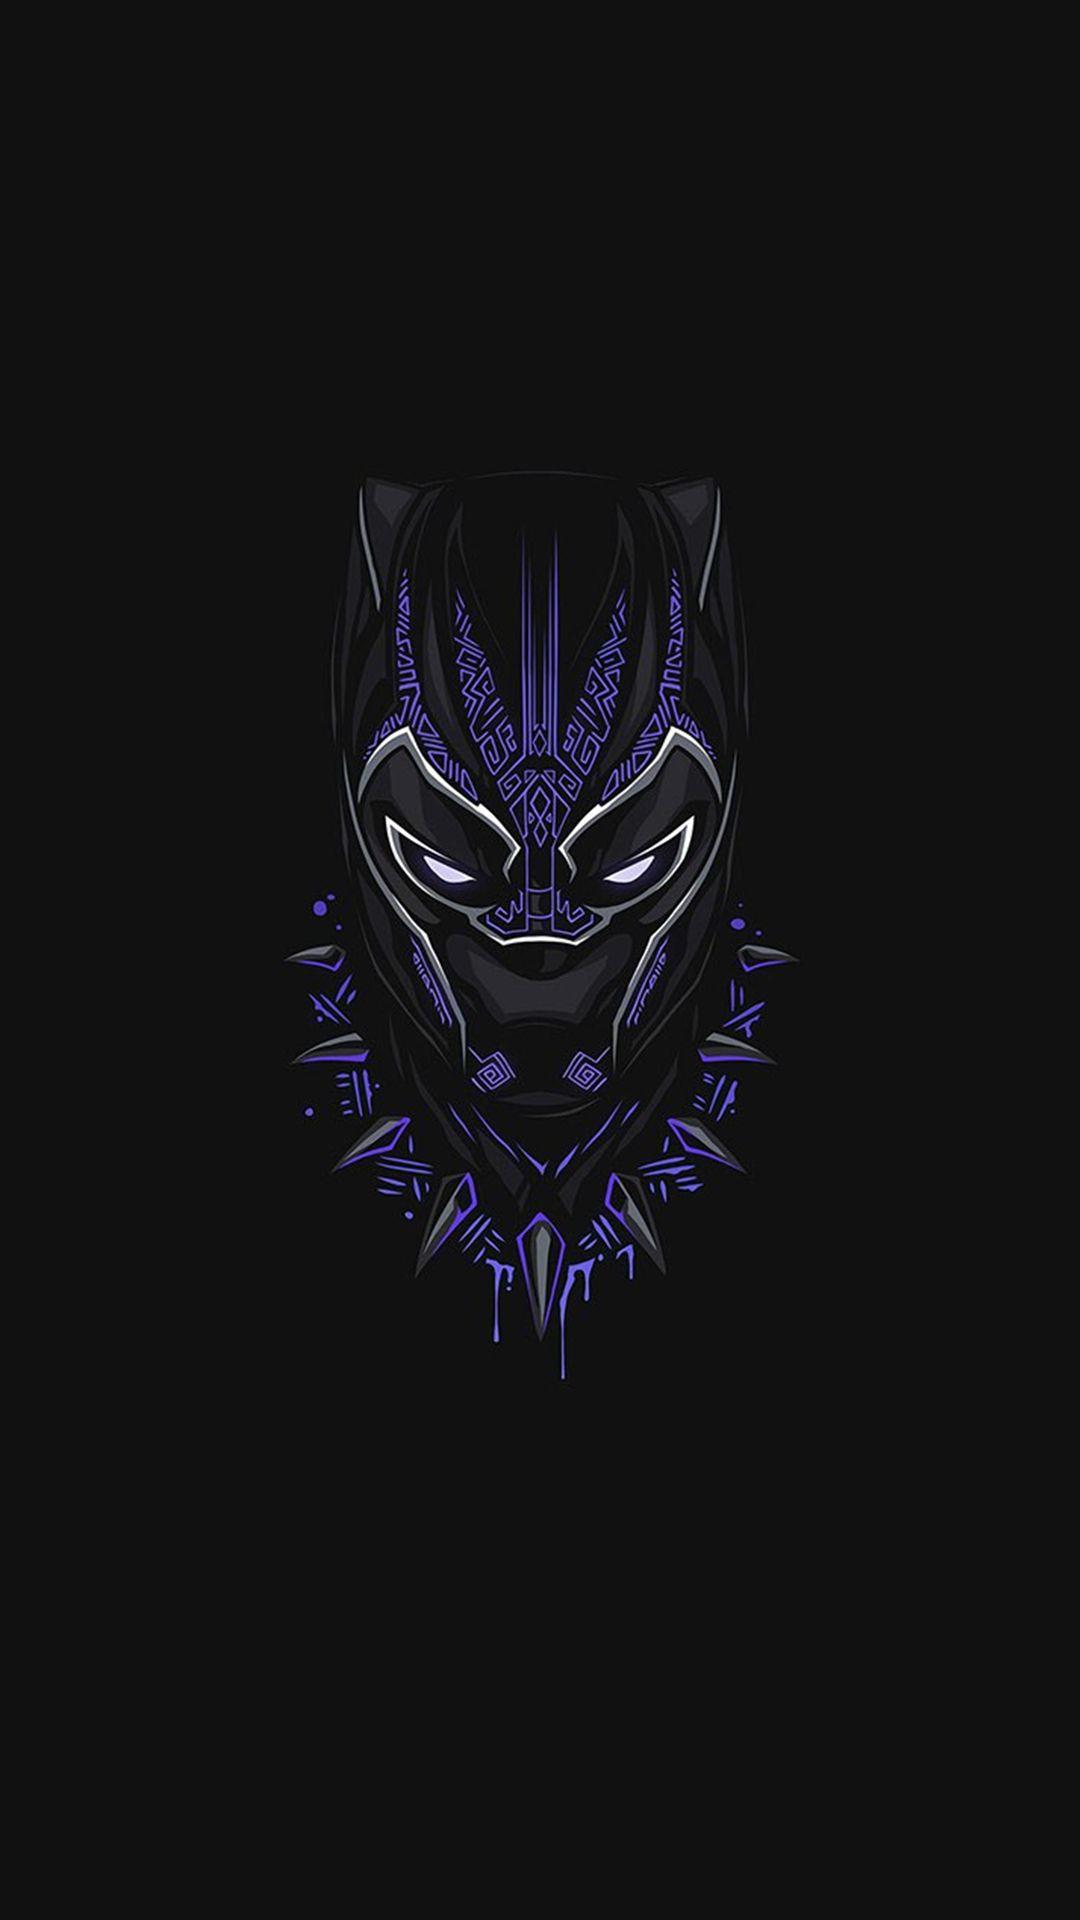 Black Panther Purple Minimal iPhone Wallpaper #averteam #avermusic